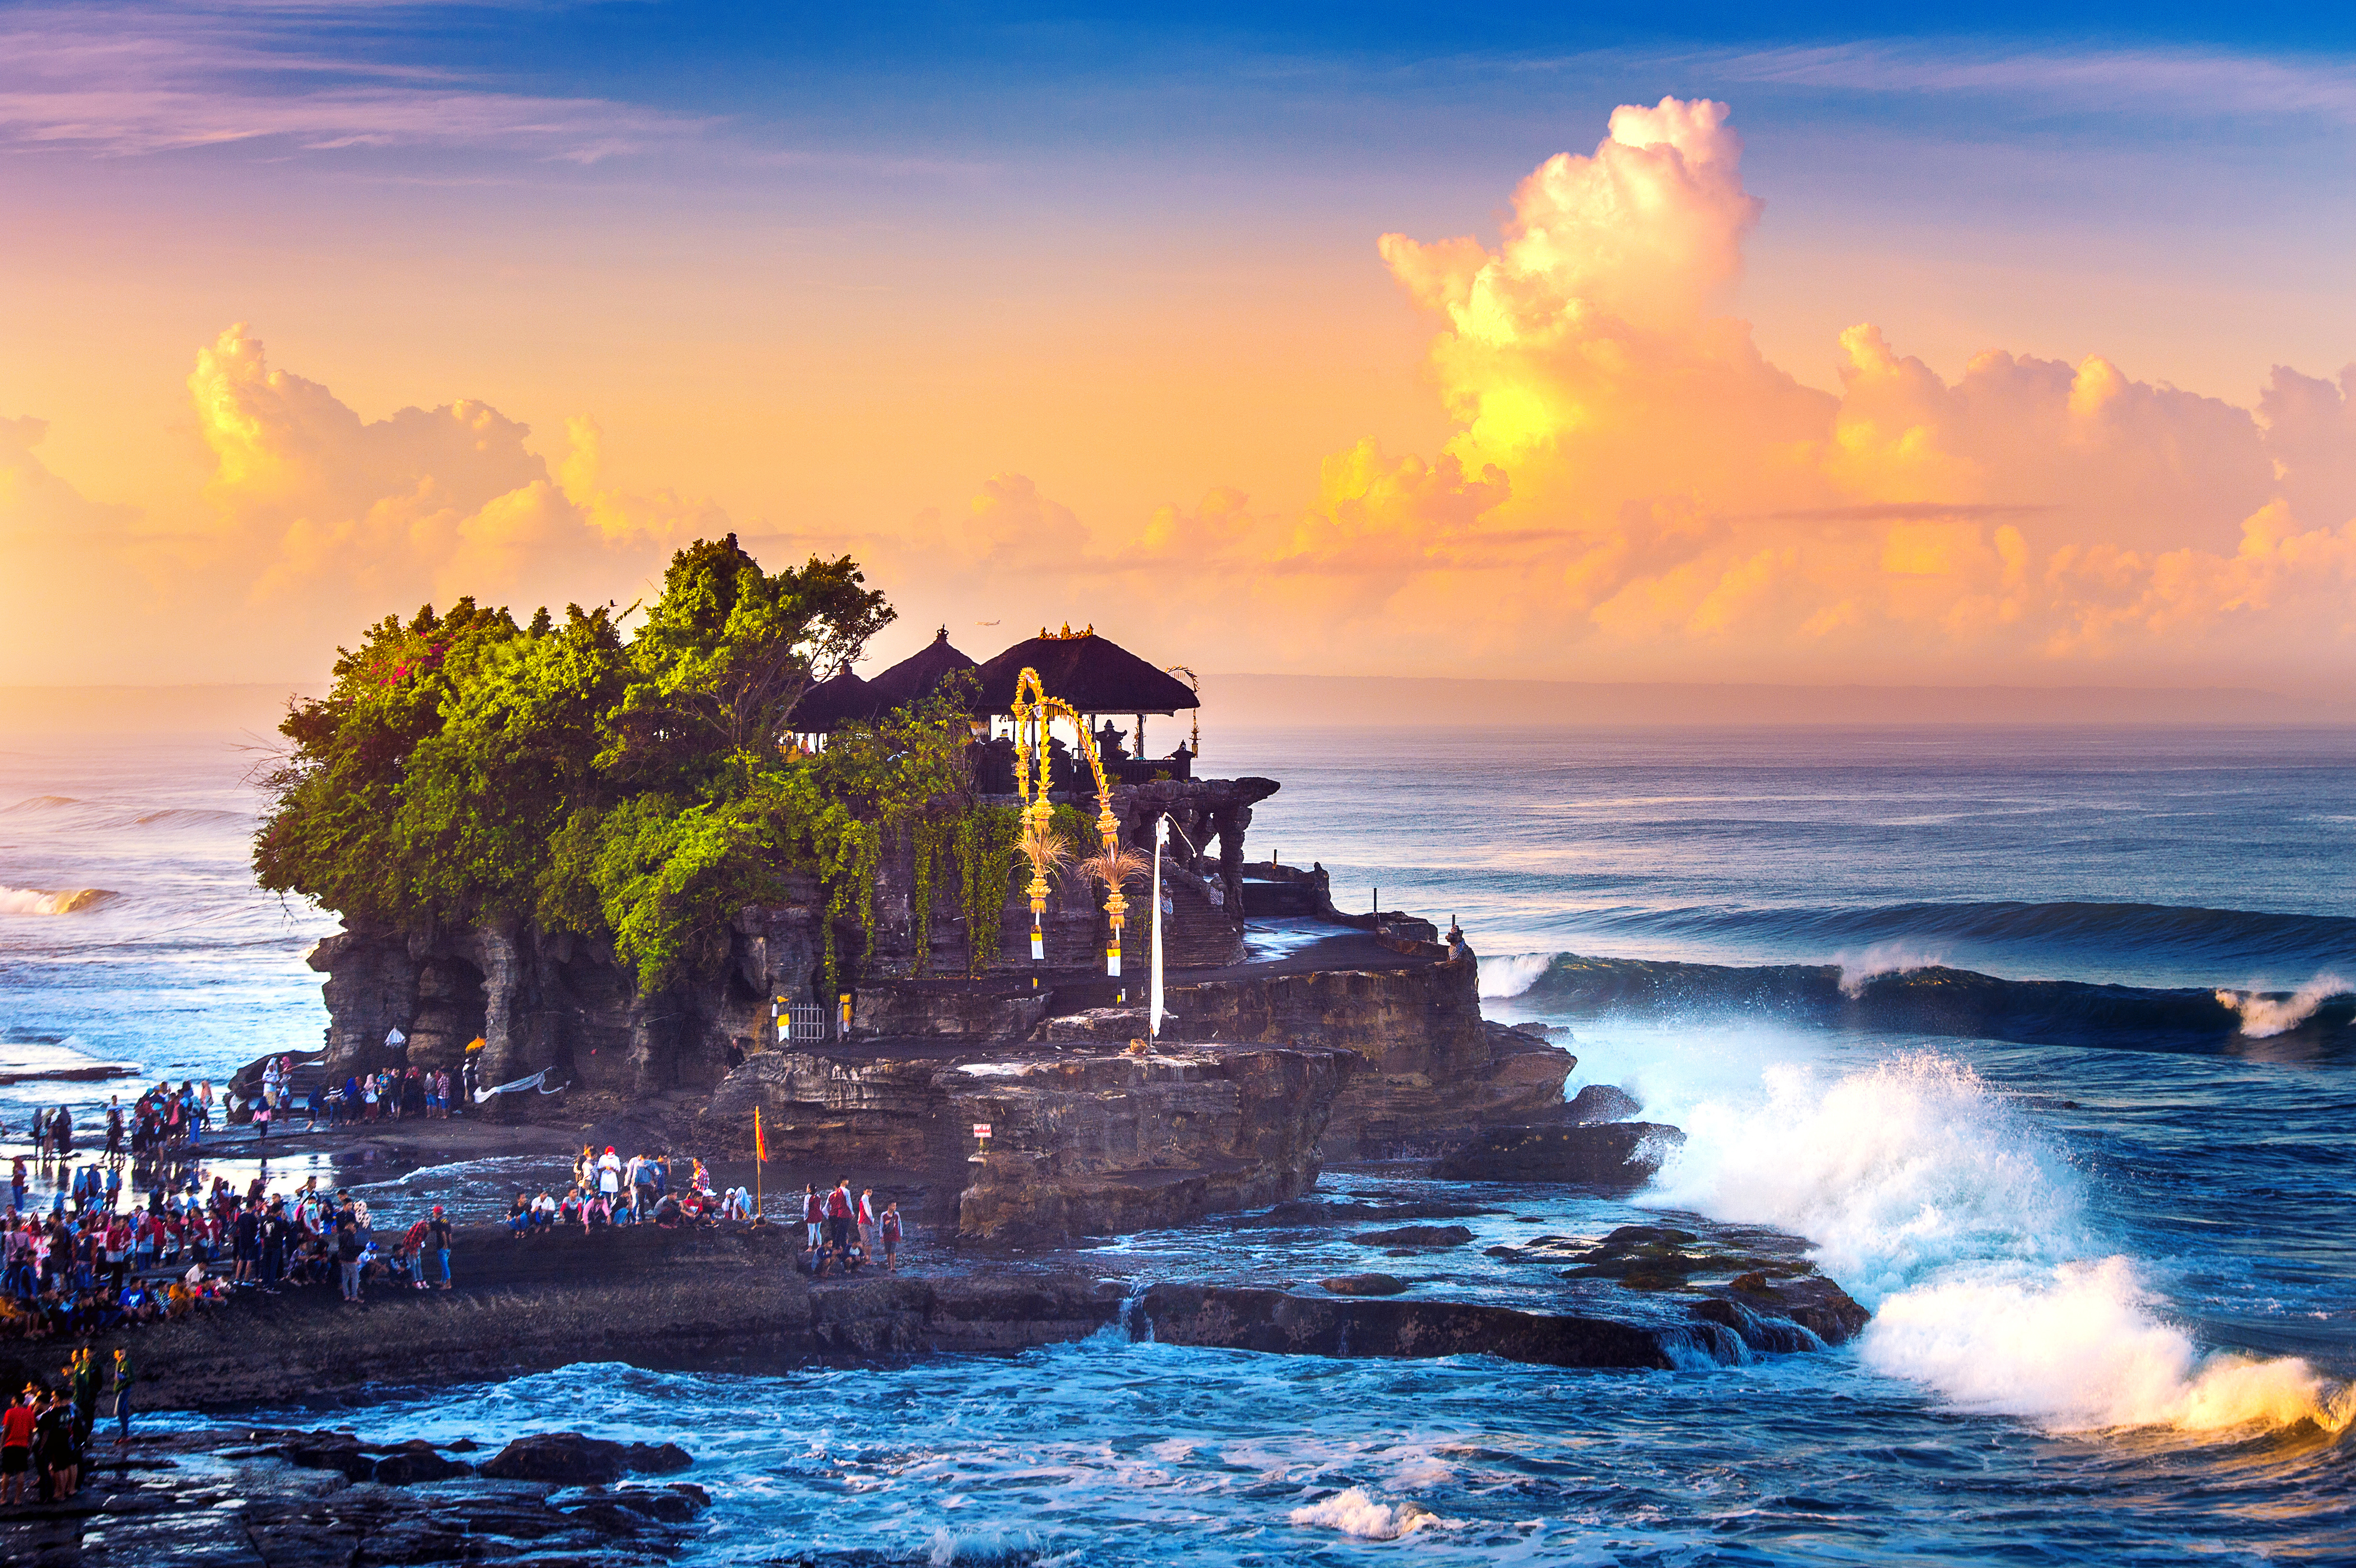  Bali  Travel Guide Popular attractions in Bali  Trip com